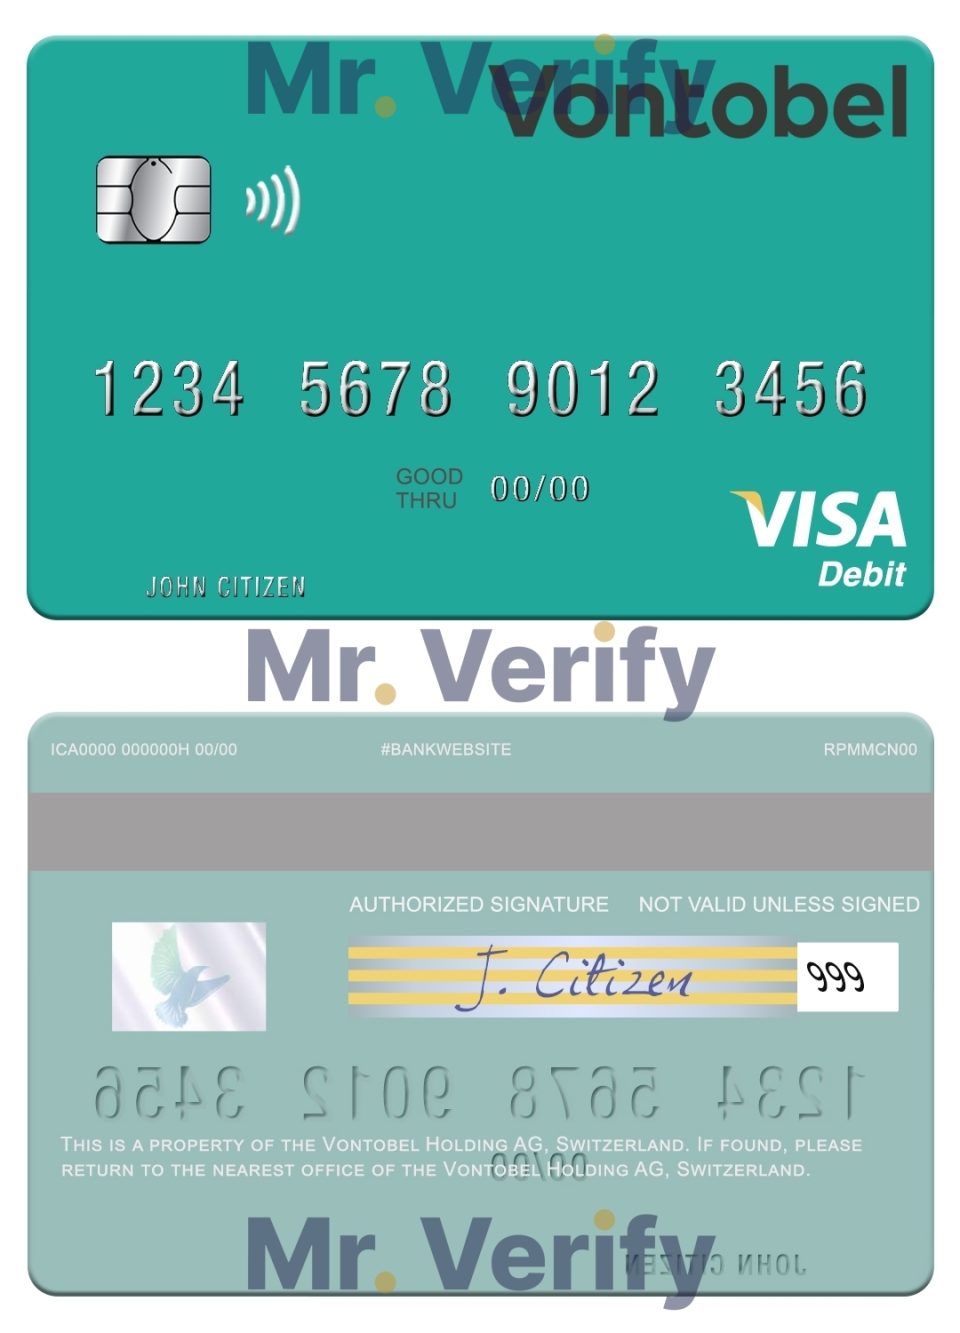 Fillable Switzerland Vontobel Holding AG visa debit card Templates | Layer-Based PSD